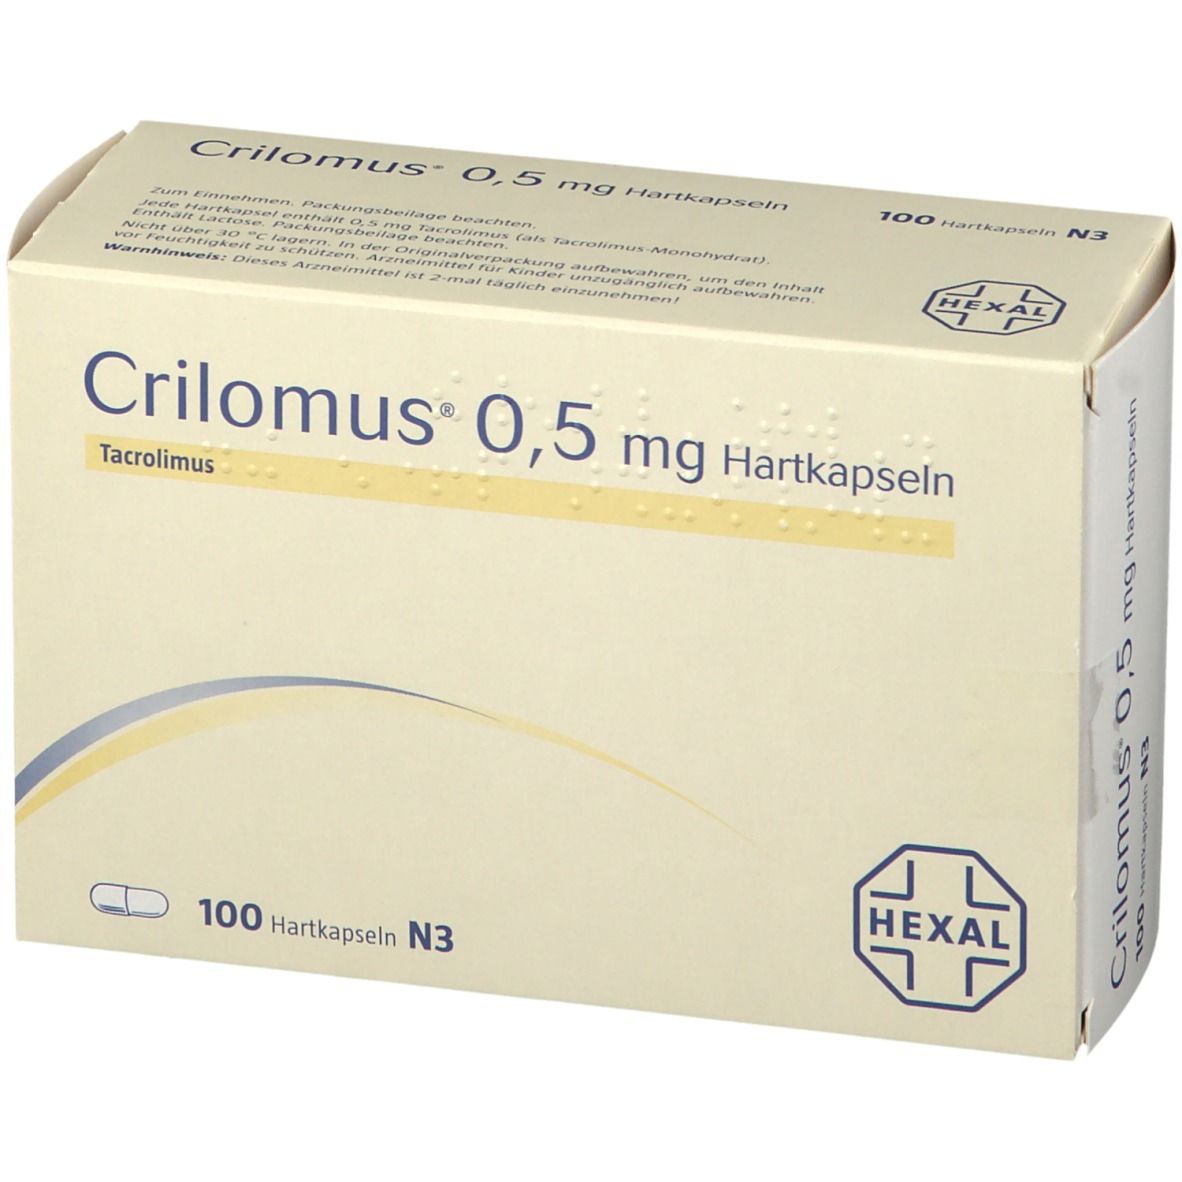 Crilomus® 0,5 mg